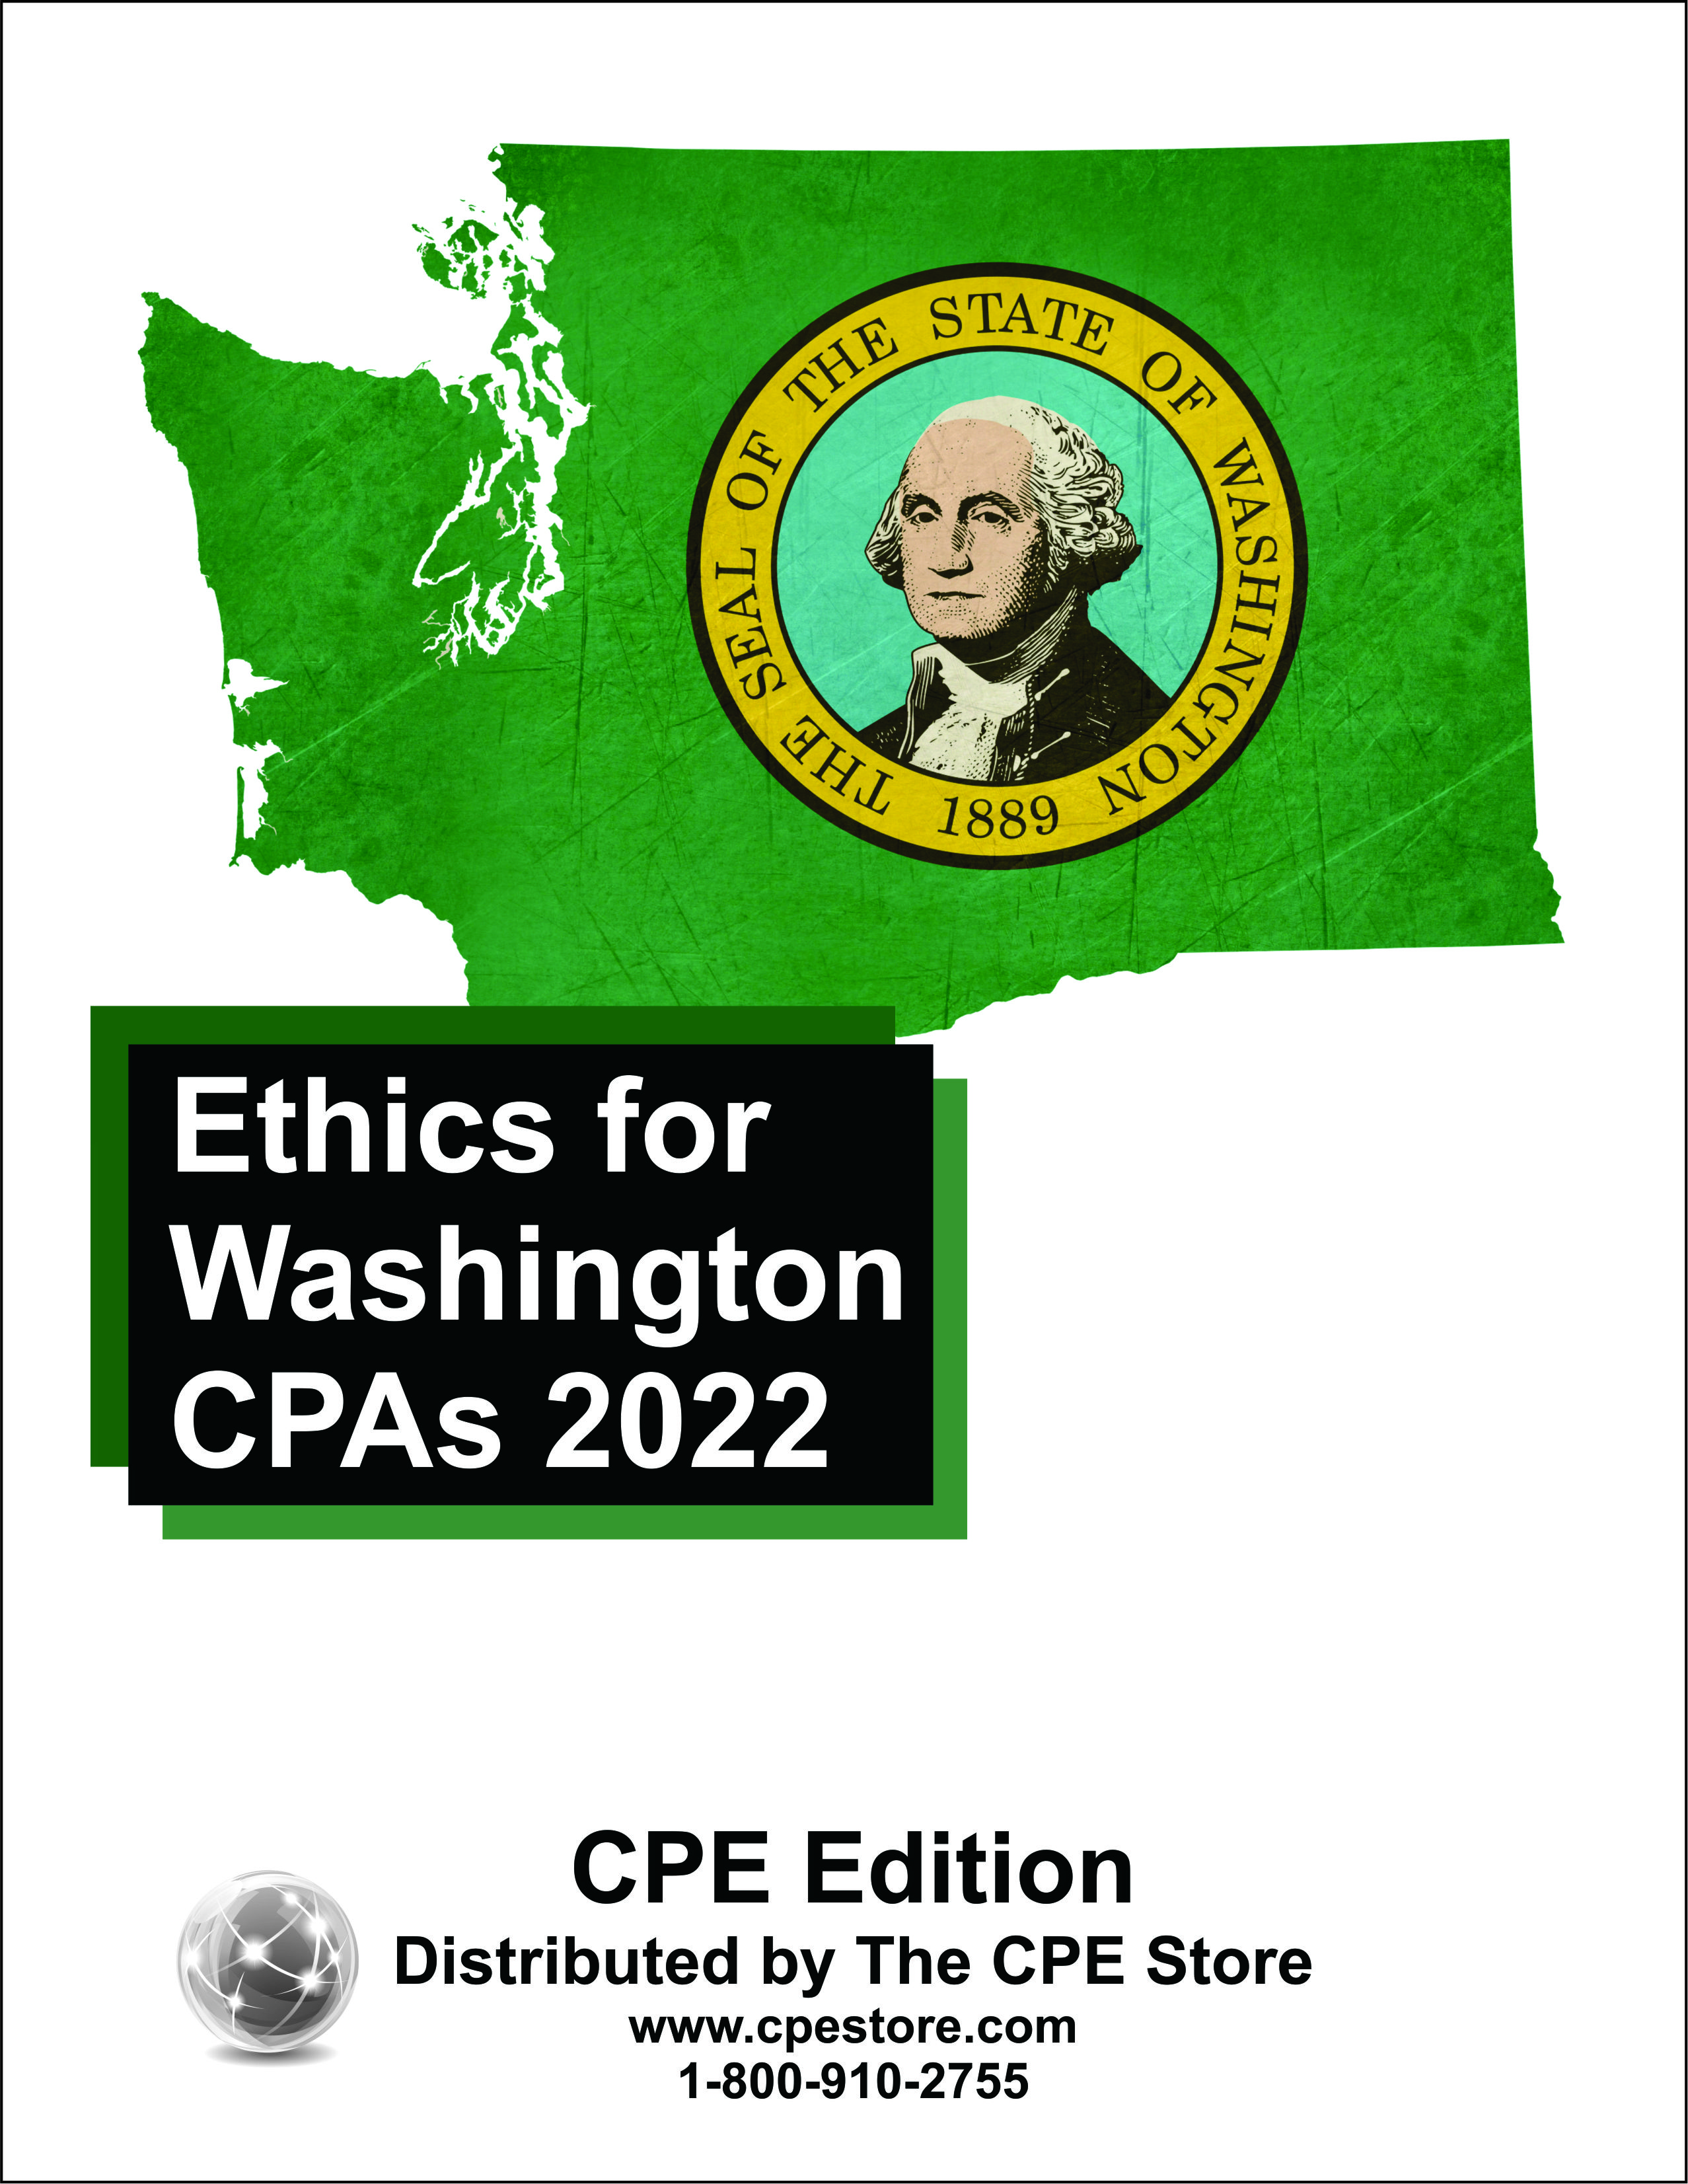 Ethics for Washington CPAs 2022